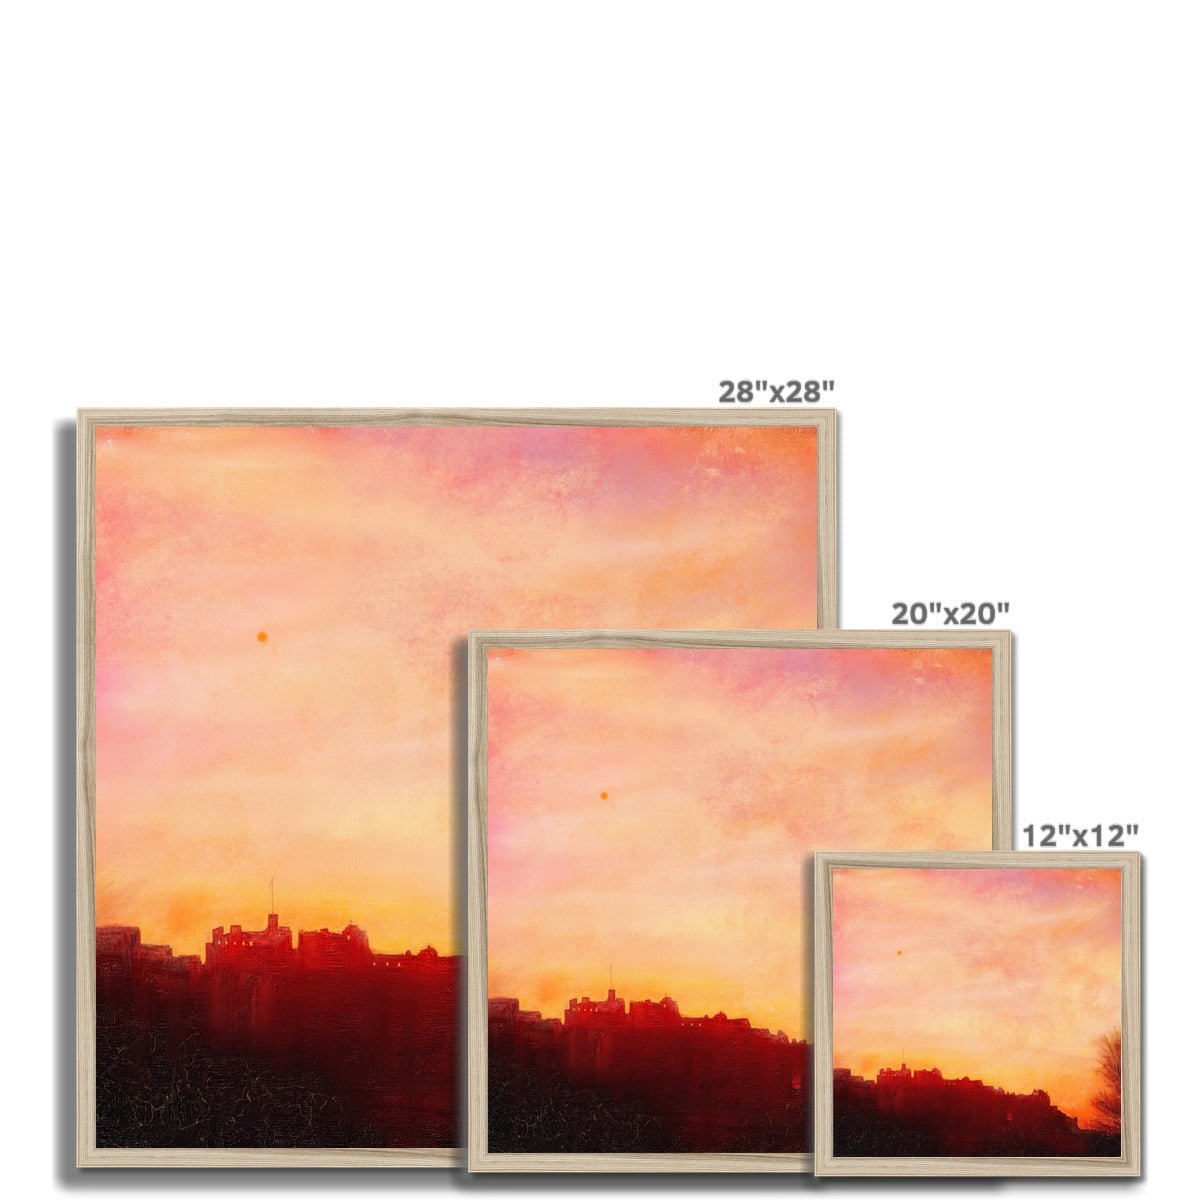 Edinburgh Castle Sunset Painting | Framed Prints From Scotland-Framed Prints-Edinburgh & Glasgow Art Gallery-Paintings, Prints, Homeware, Art Gifts From Scotland By Scottish Artist Kevin Hunter